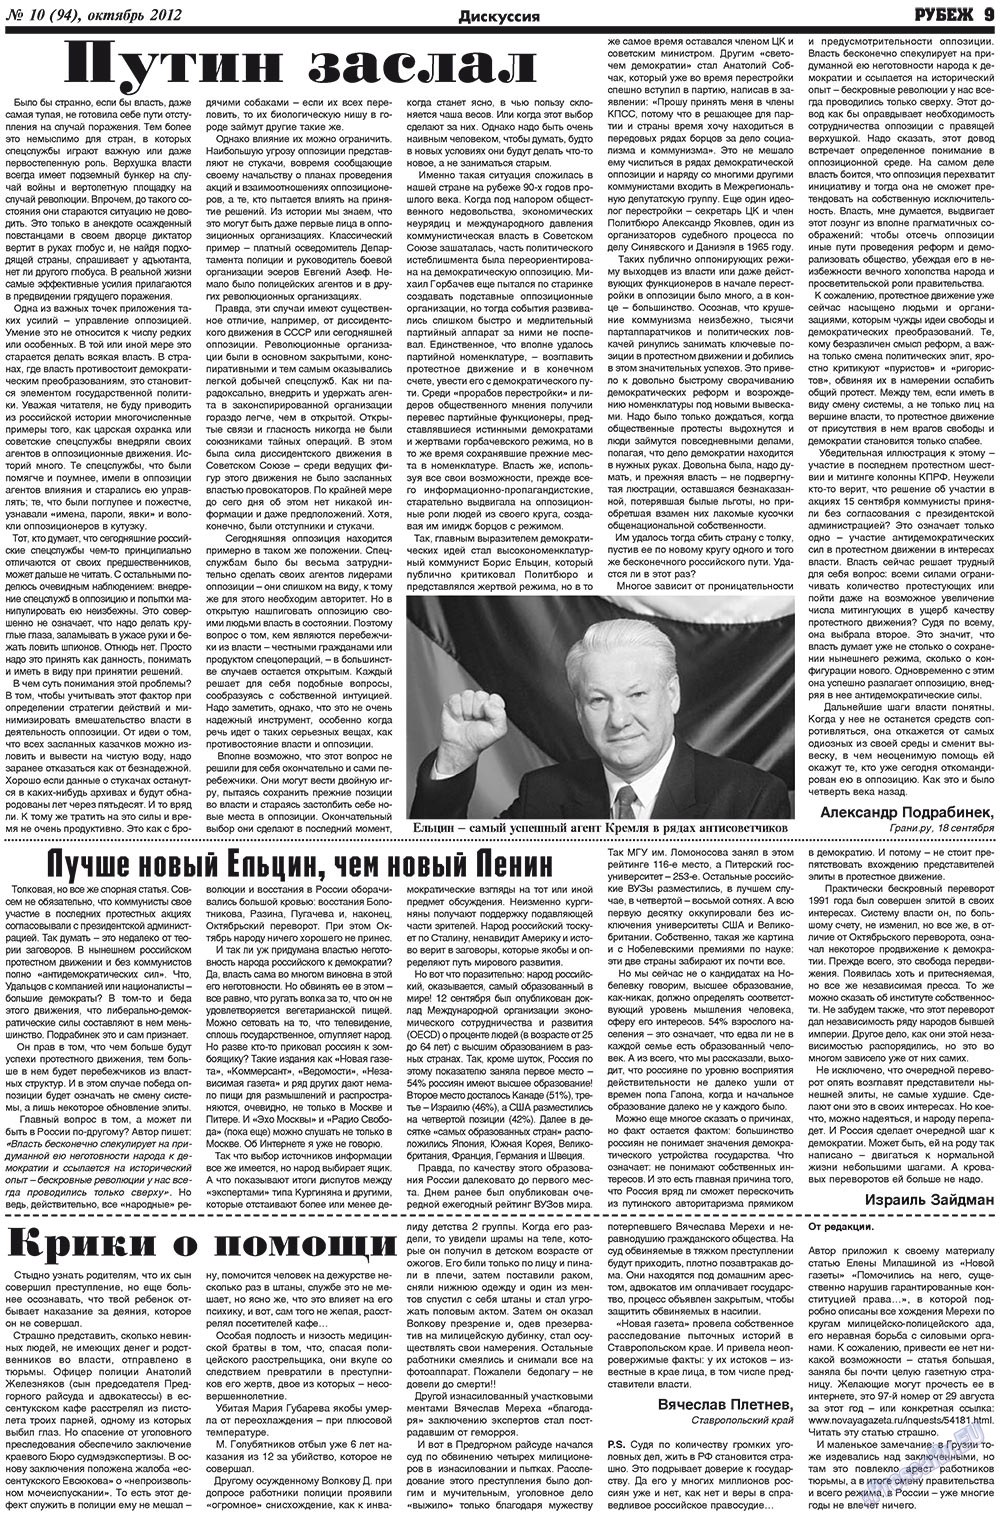 Рубеж, газета. 2012 №10 стр.9